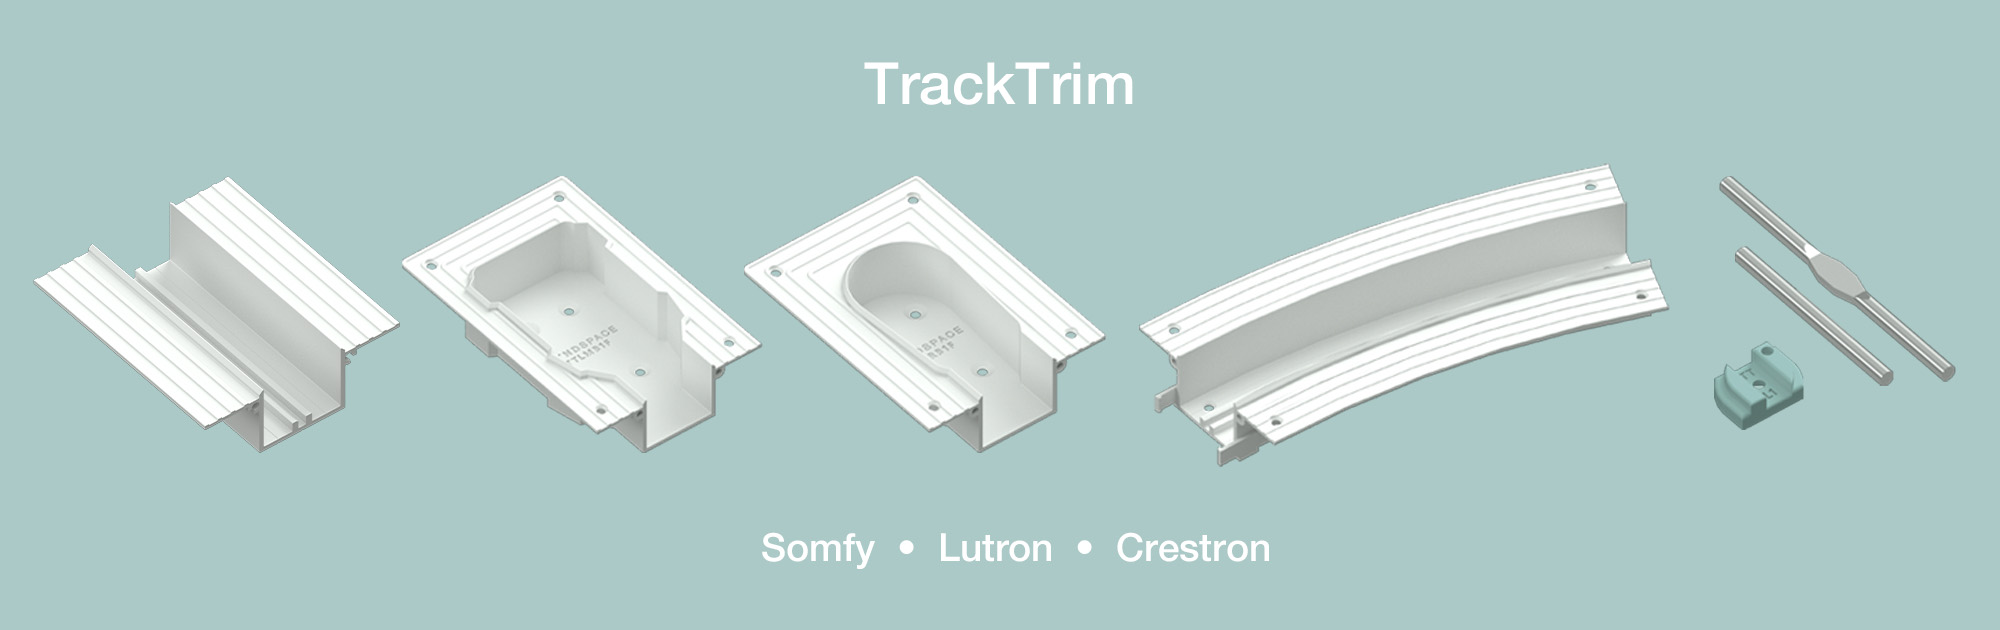 Tracktrim Parts In Box